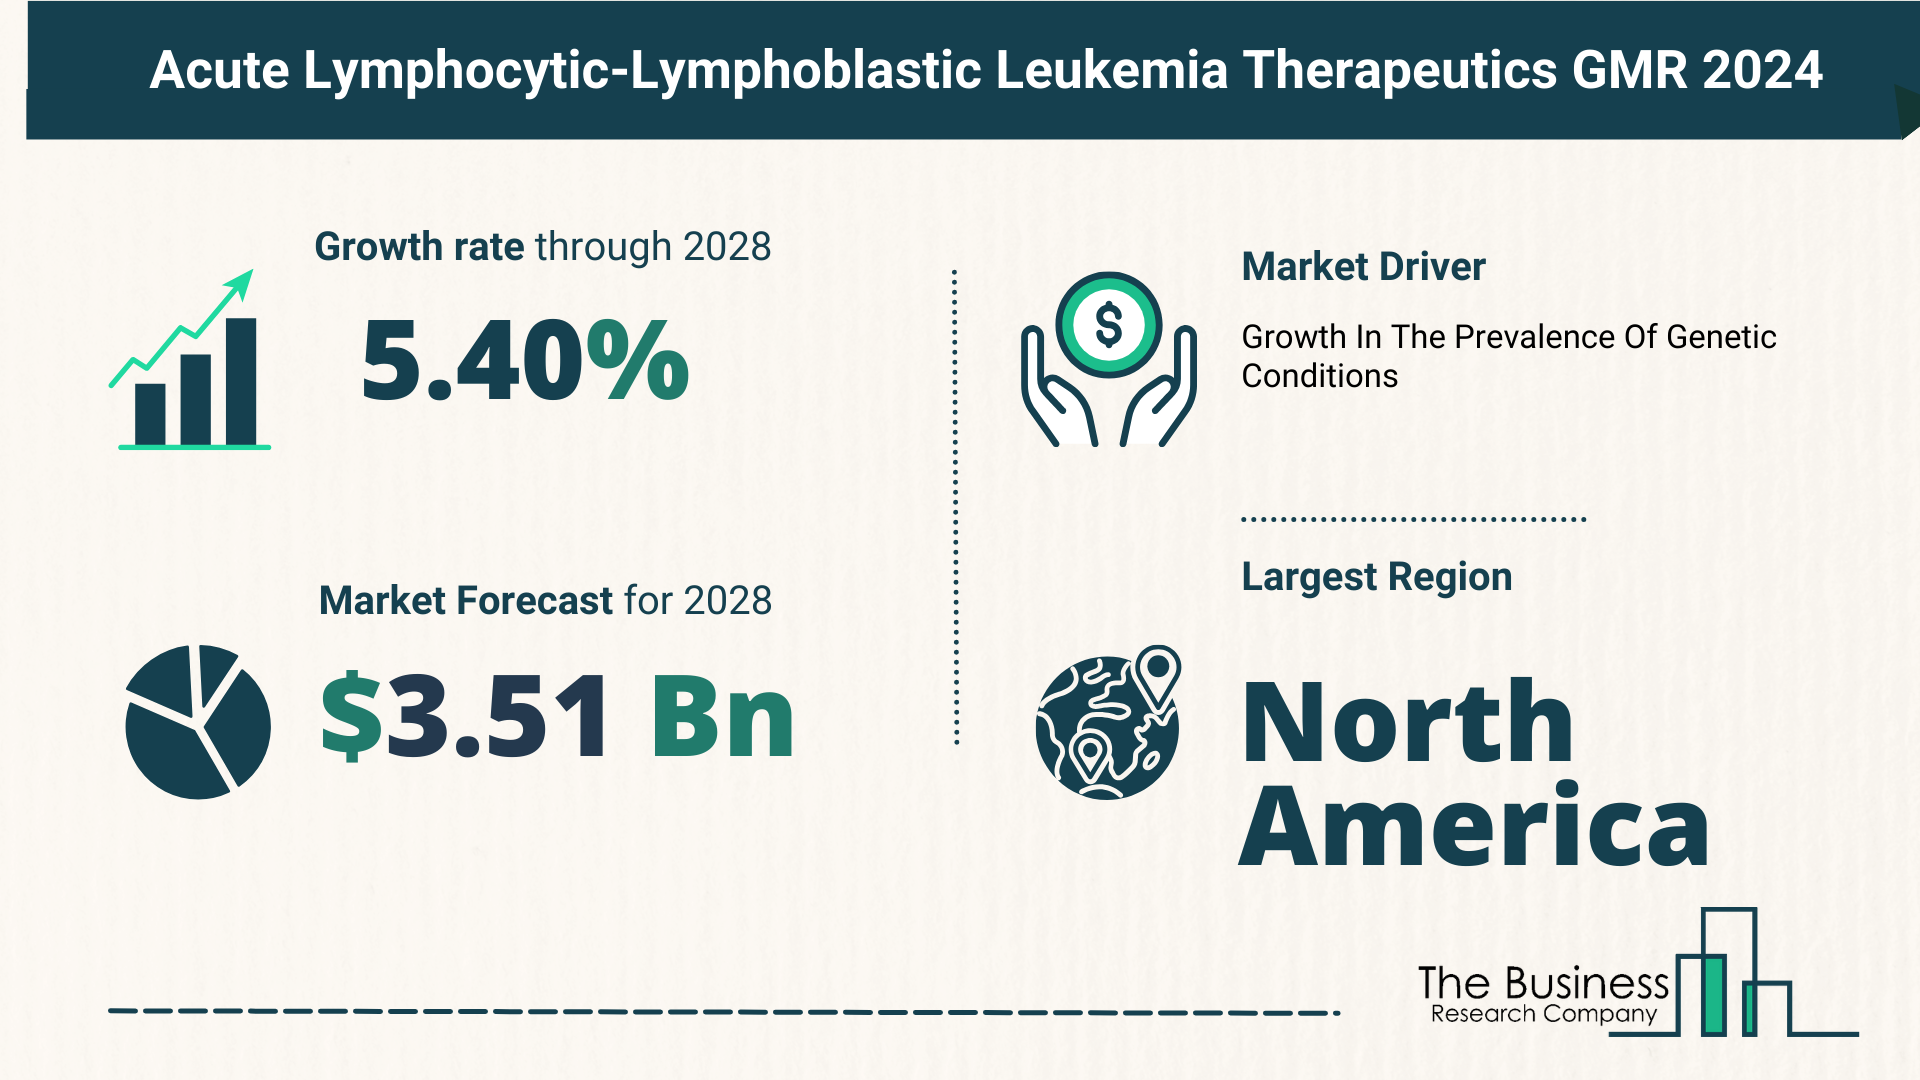 Global Acute Lymphocytic-Lymphoblastic Leukemia Therapeutics Market Report 2024 – Top Market Trends And Opportunities